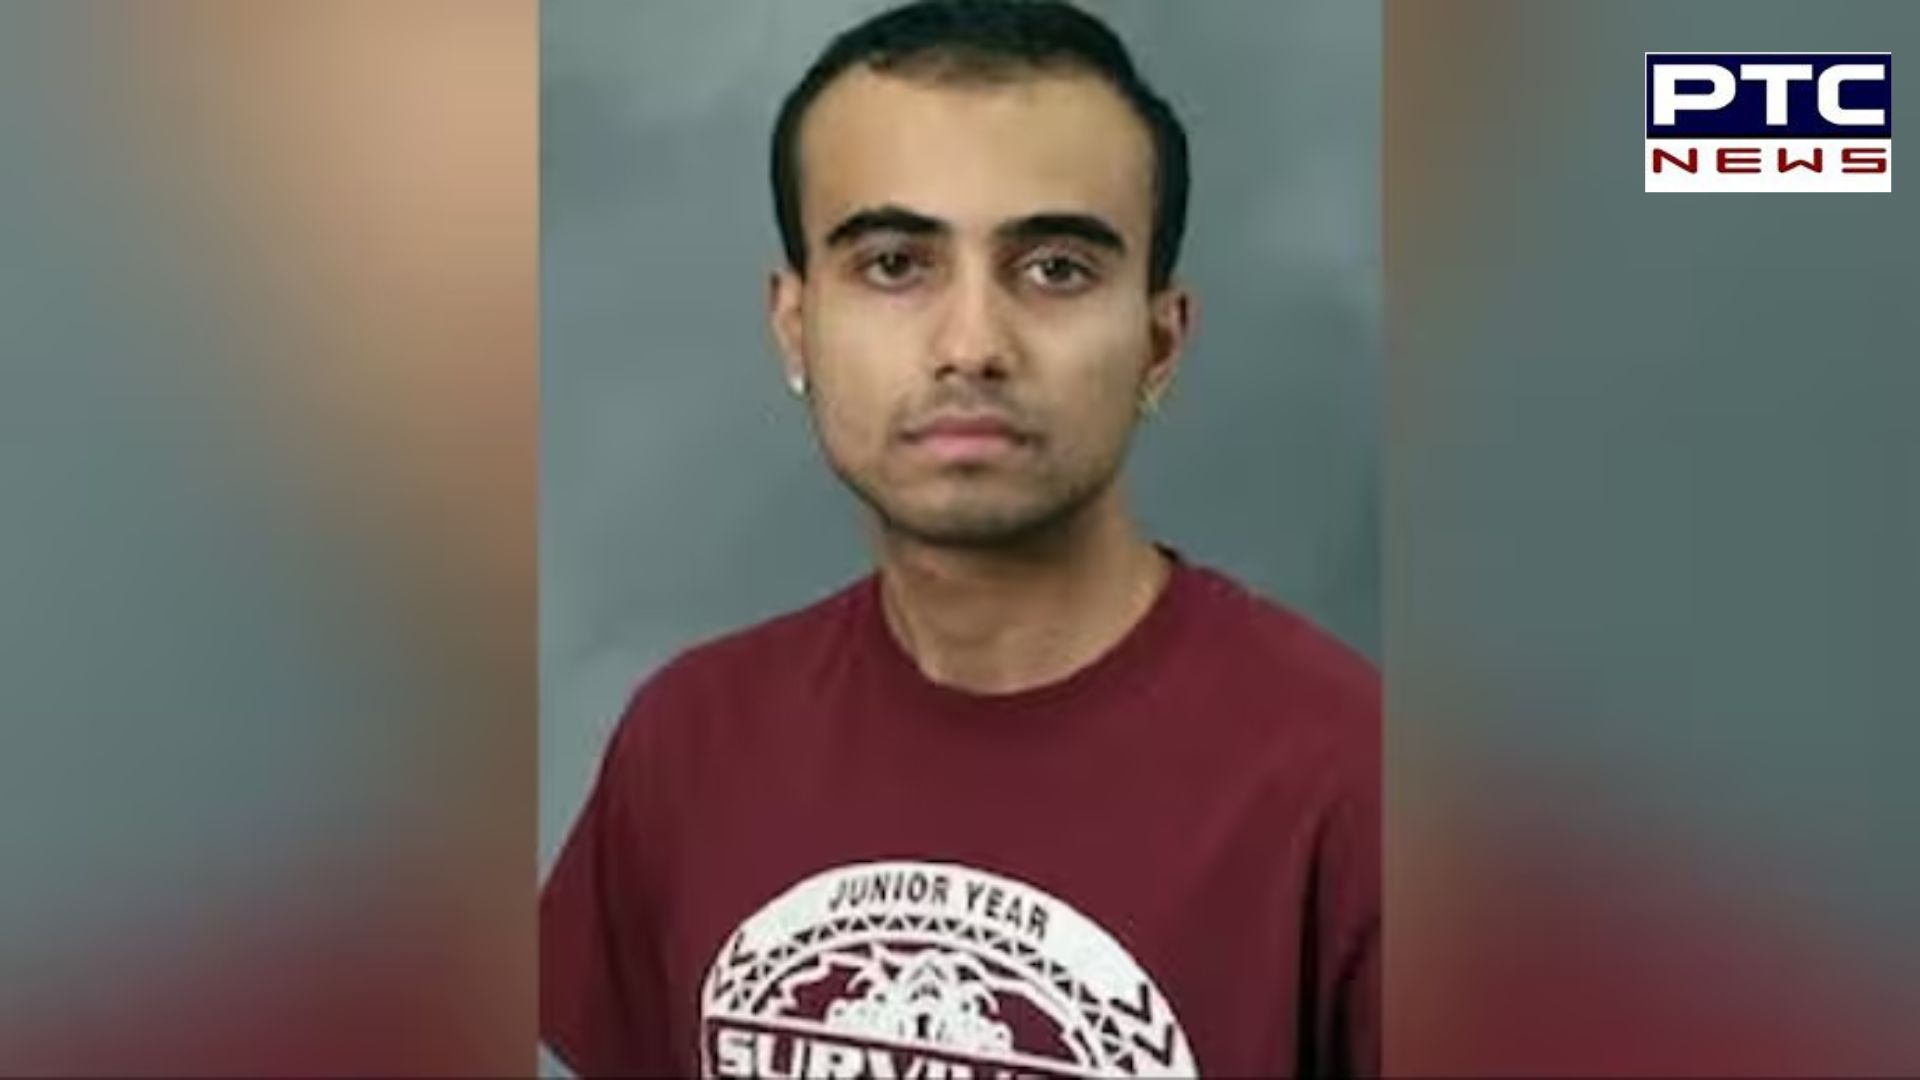 US university Indian-origin student found dead from self-inflicted gunshot: Report